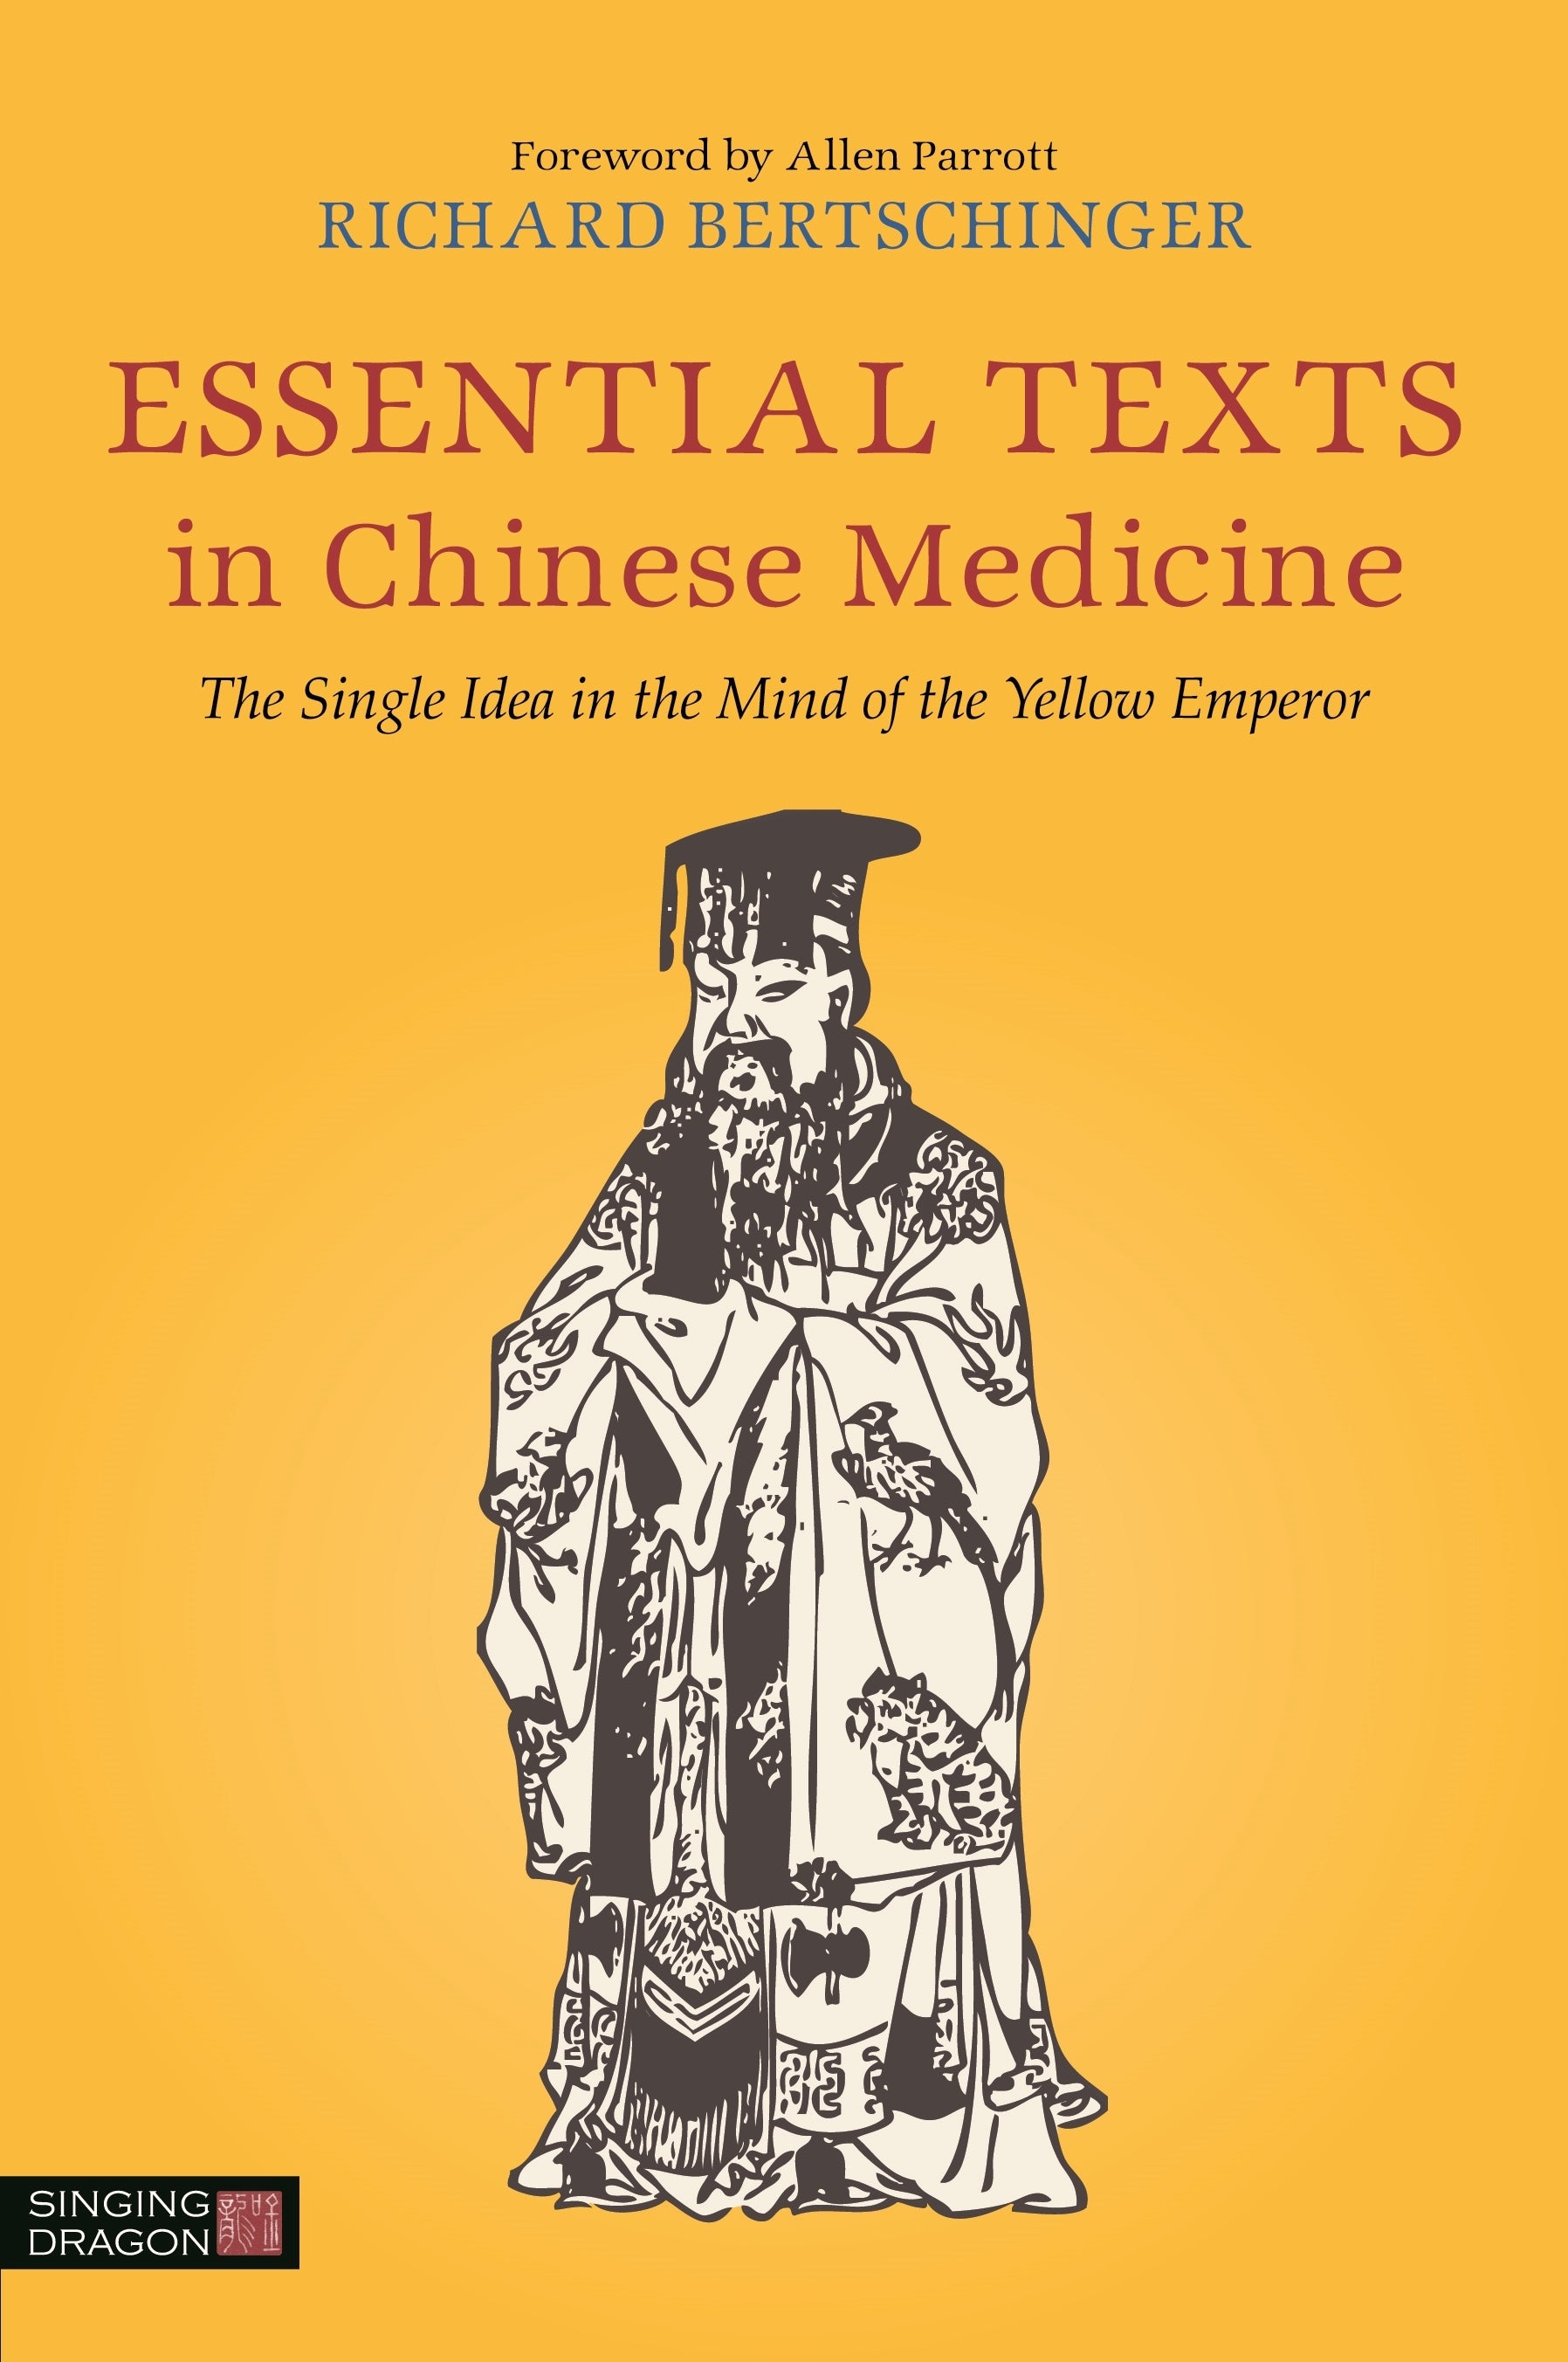 Essential Texts in Chinese Medicine by Richard Bertschinger